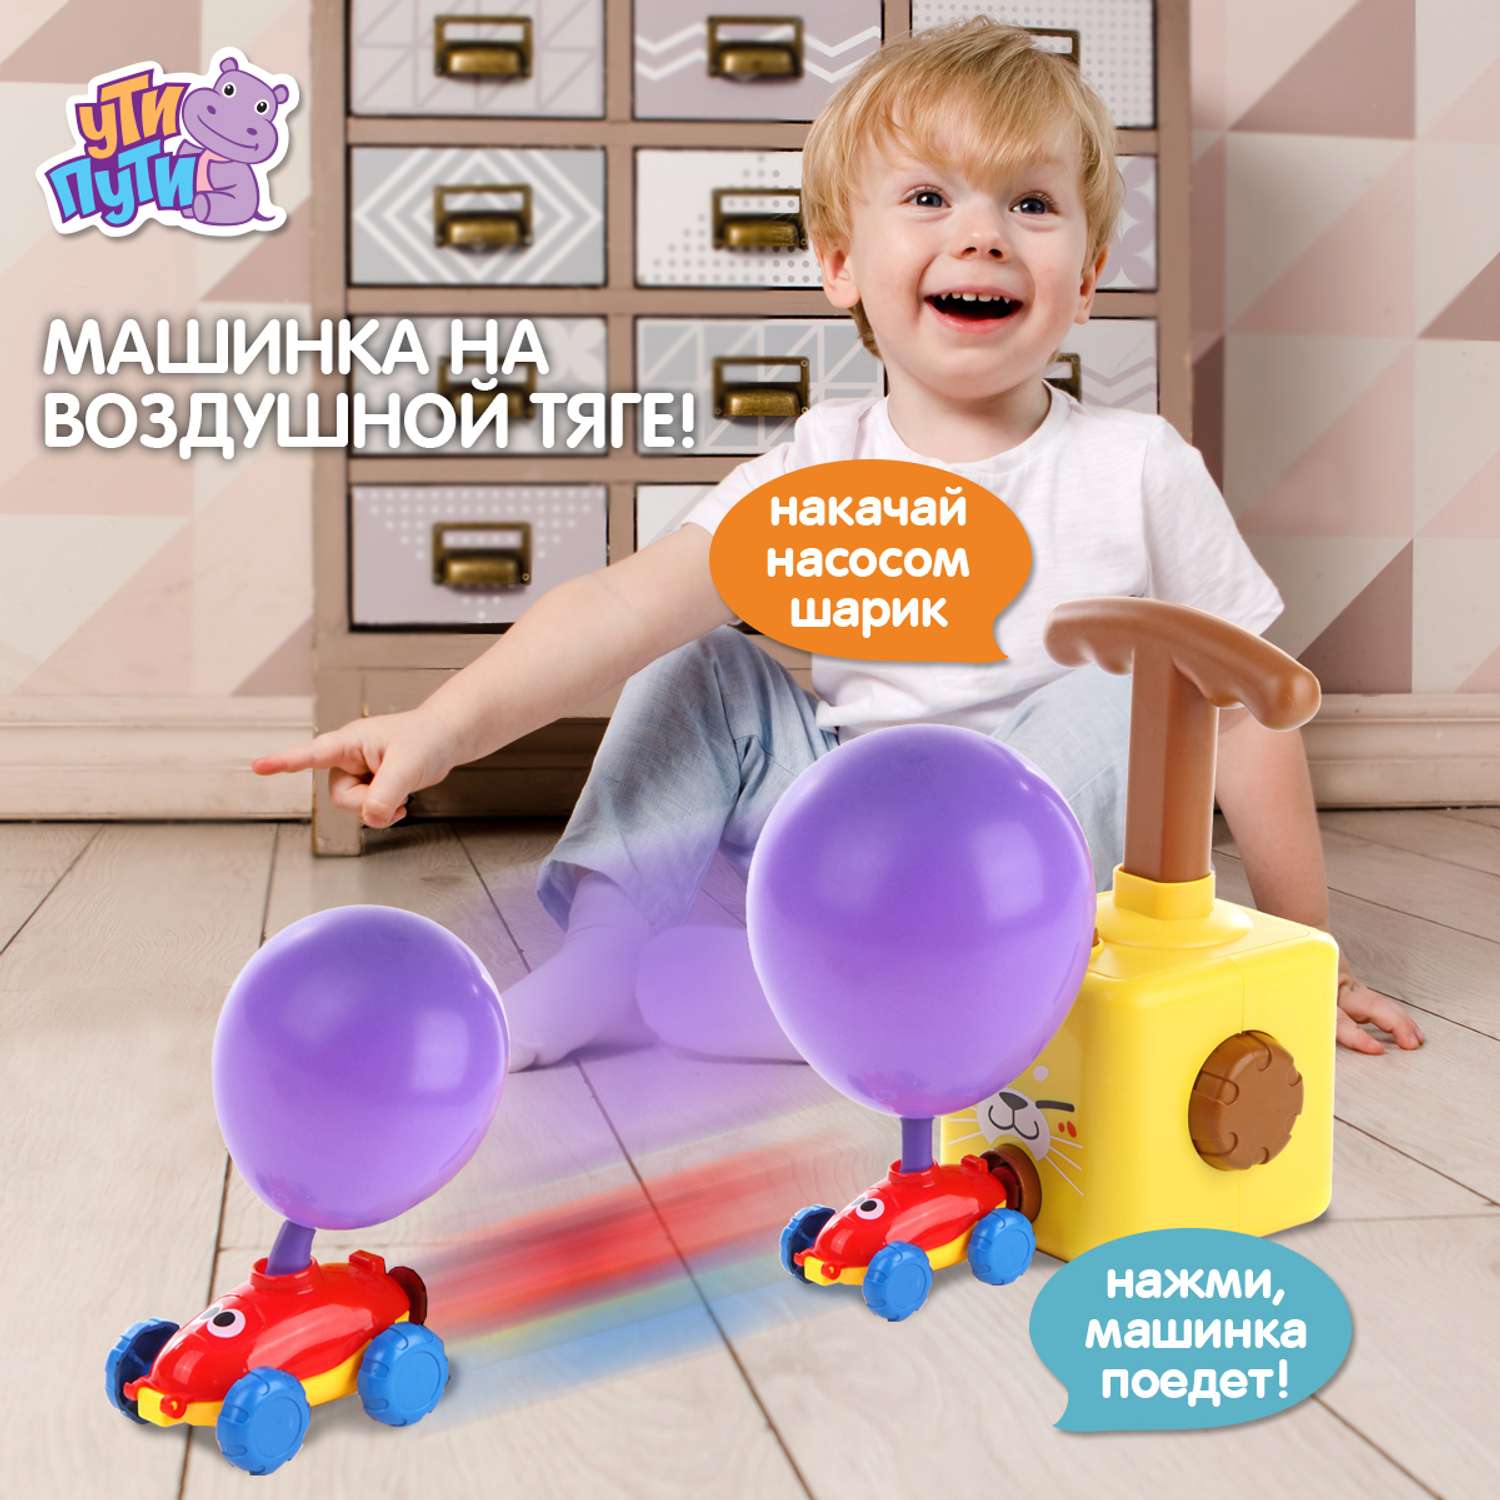 Машинка Ути Пути развивающая игрушка на воздушной тяге - фото 2